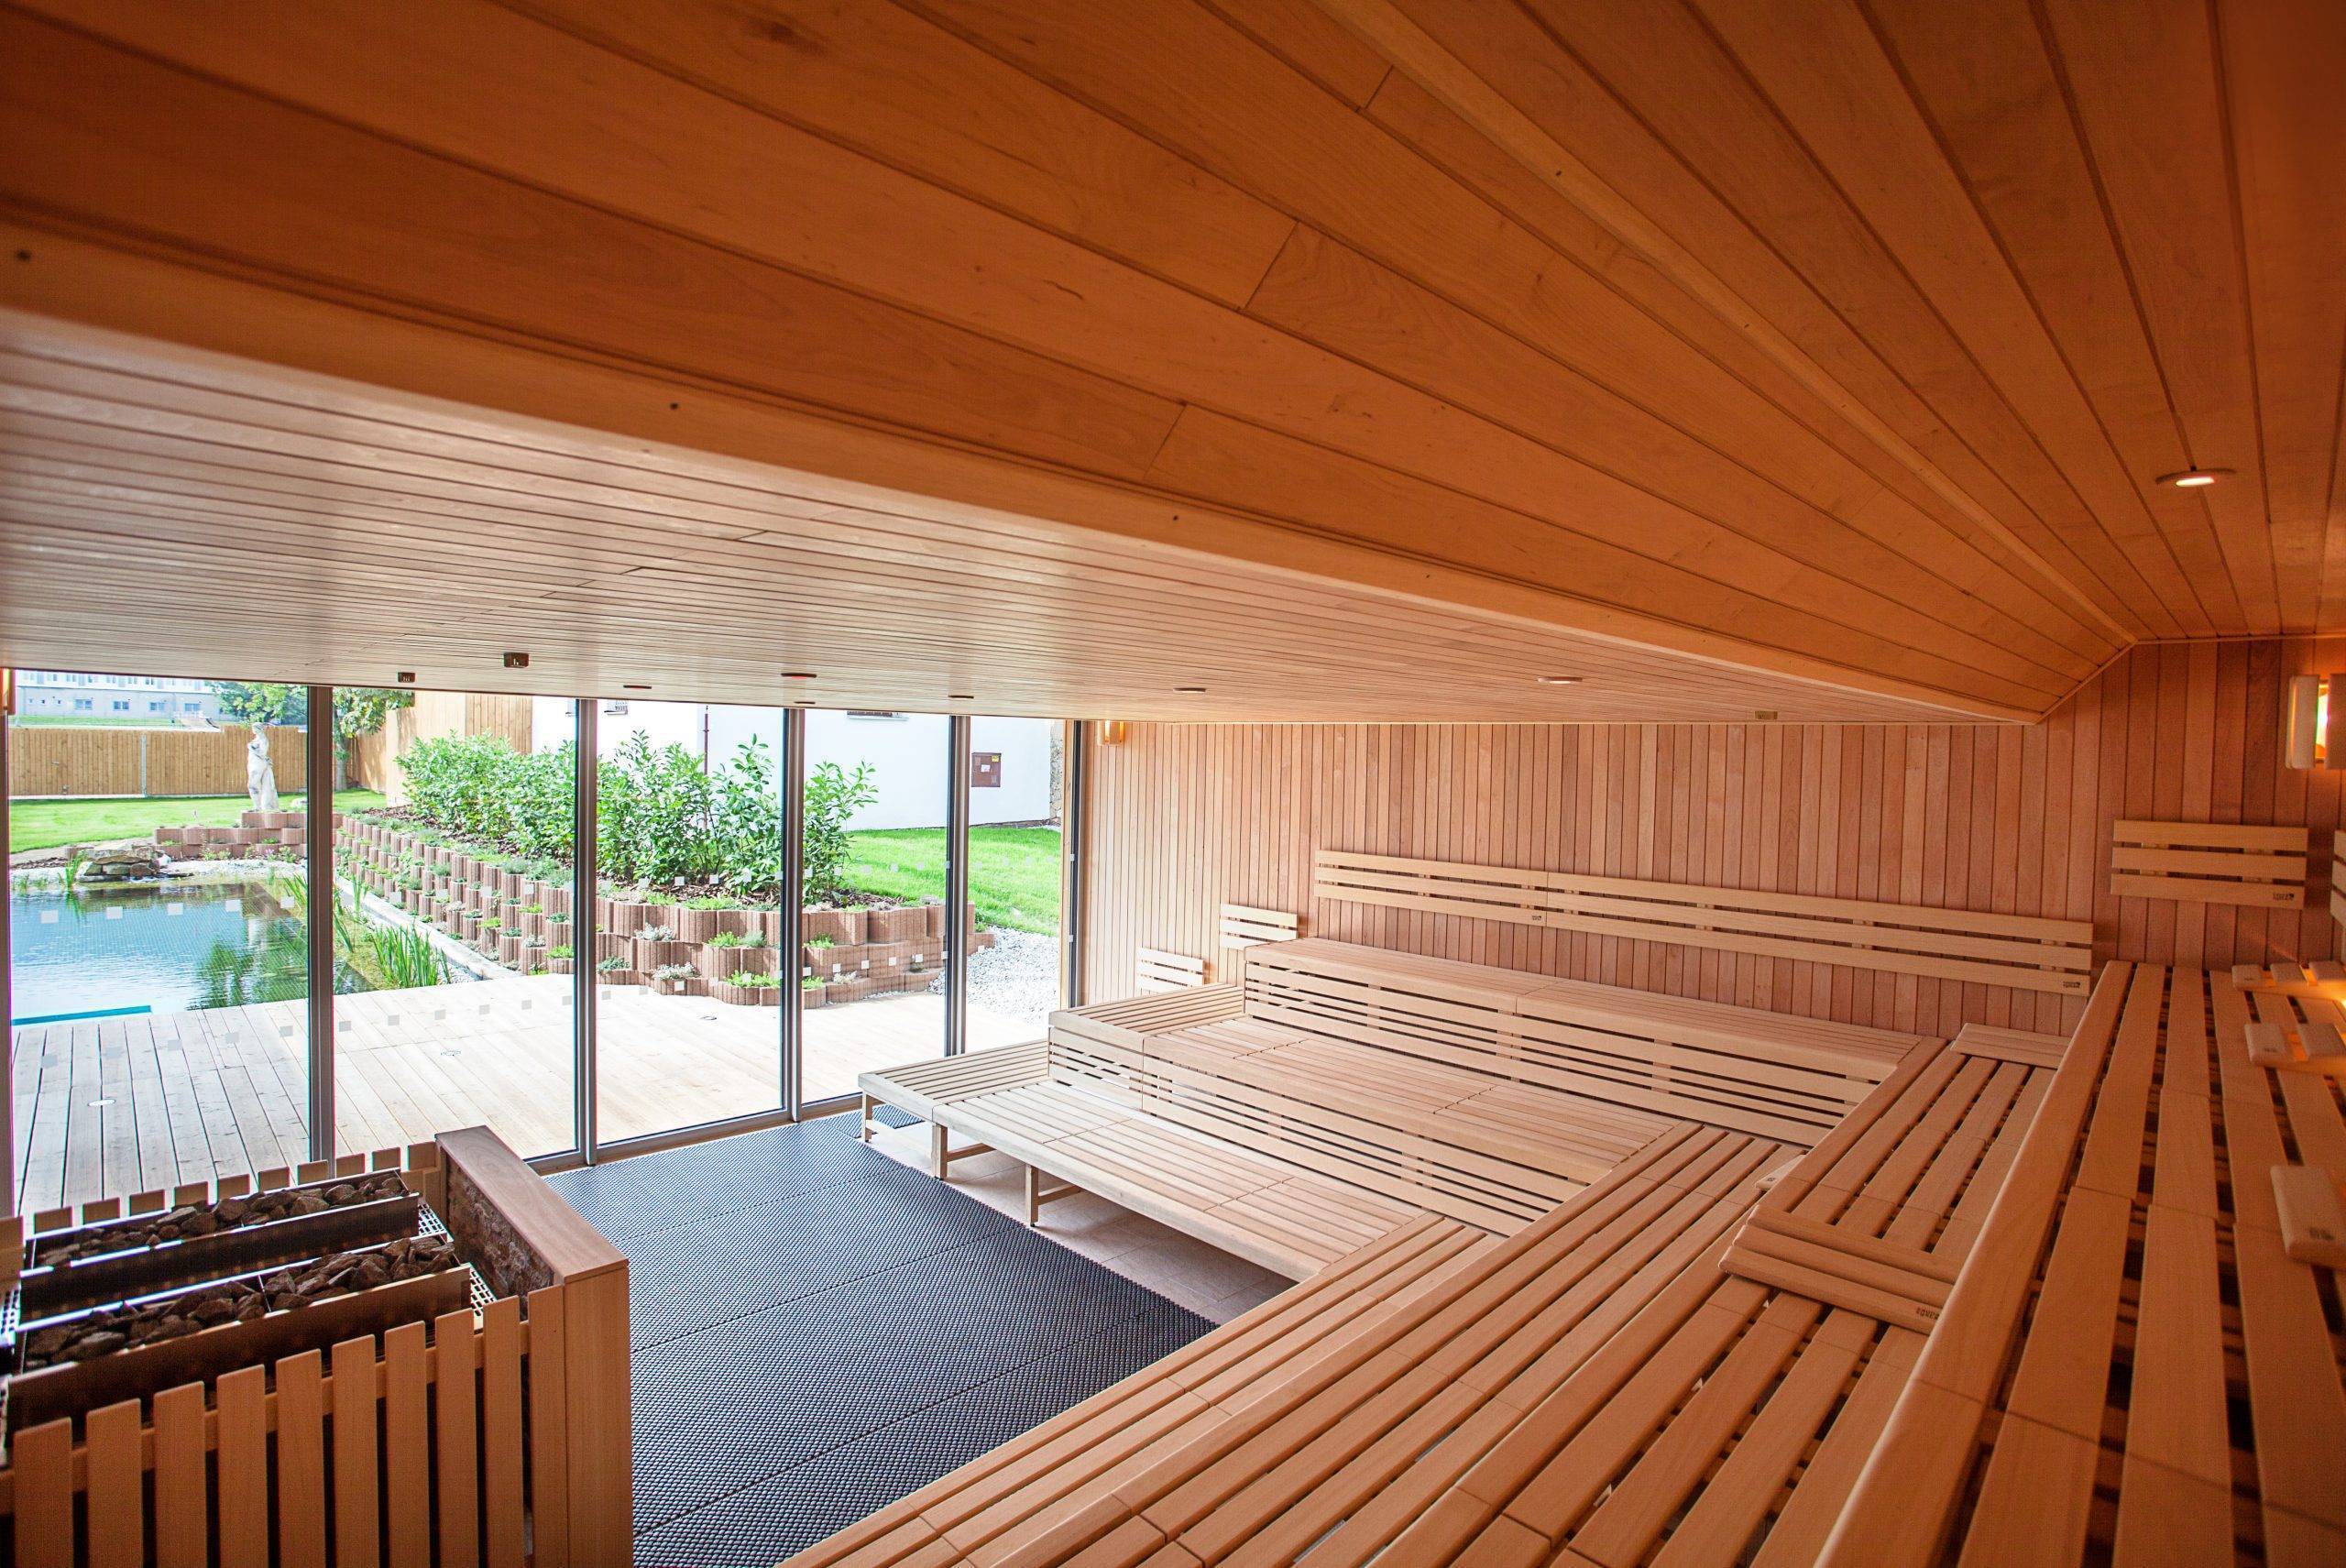 Panoramatická sauna v Prachaticích